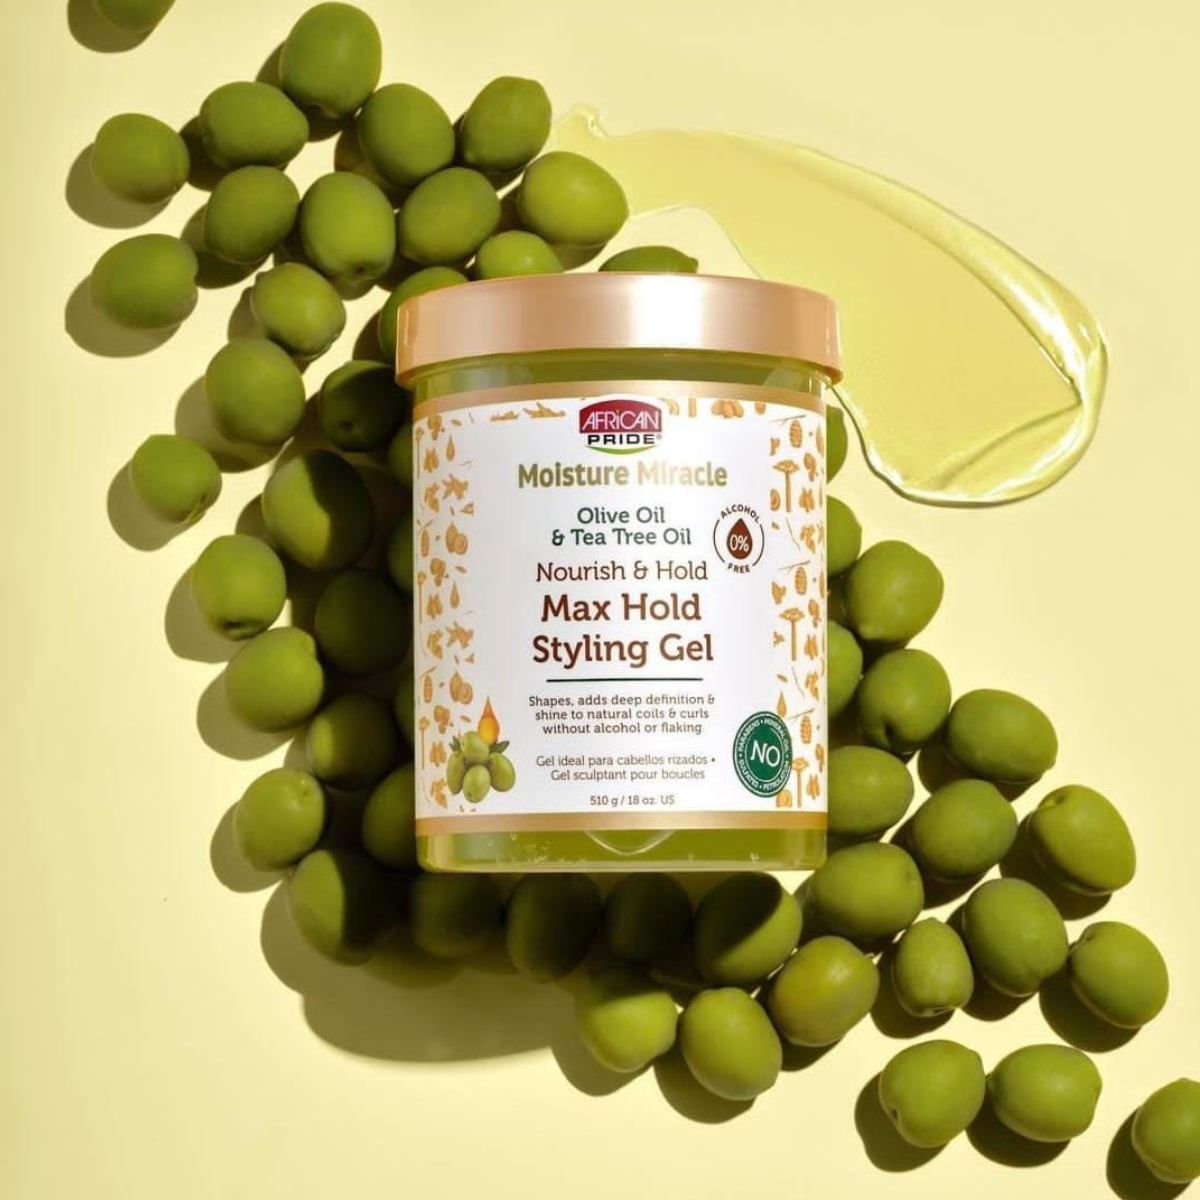 gel african pride olive oil moisture miracle comprar en onlineshoppingcenterg Colombia centro de compras en linea osc 2